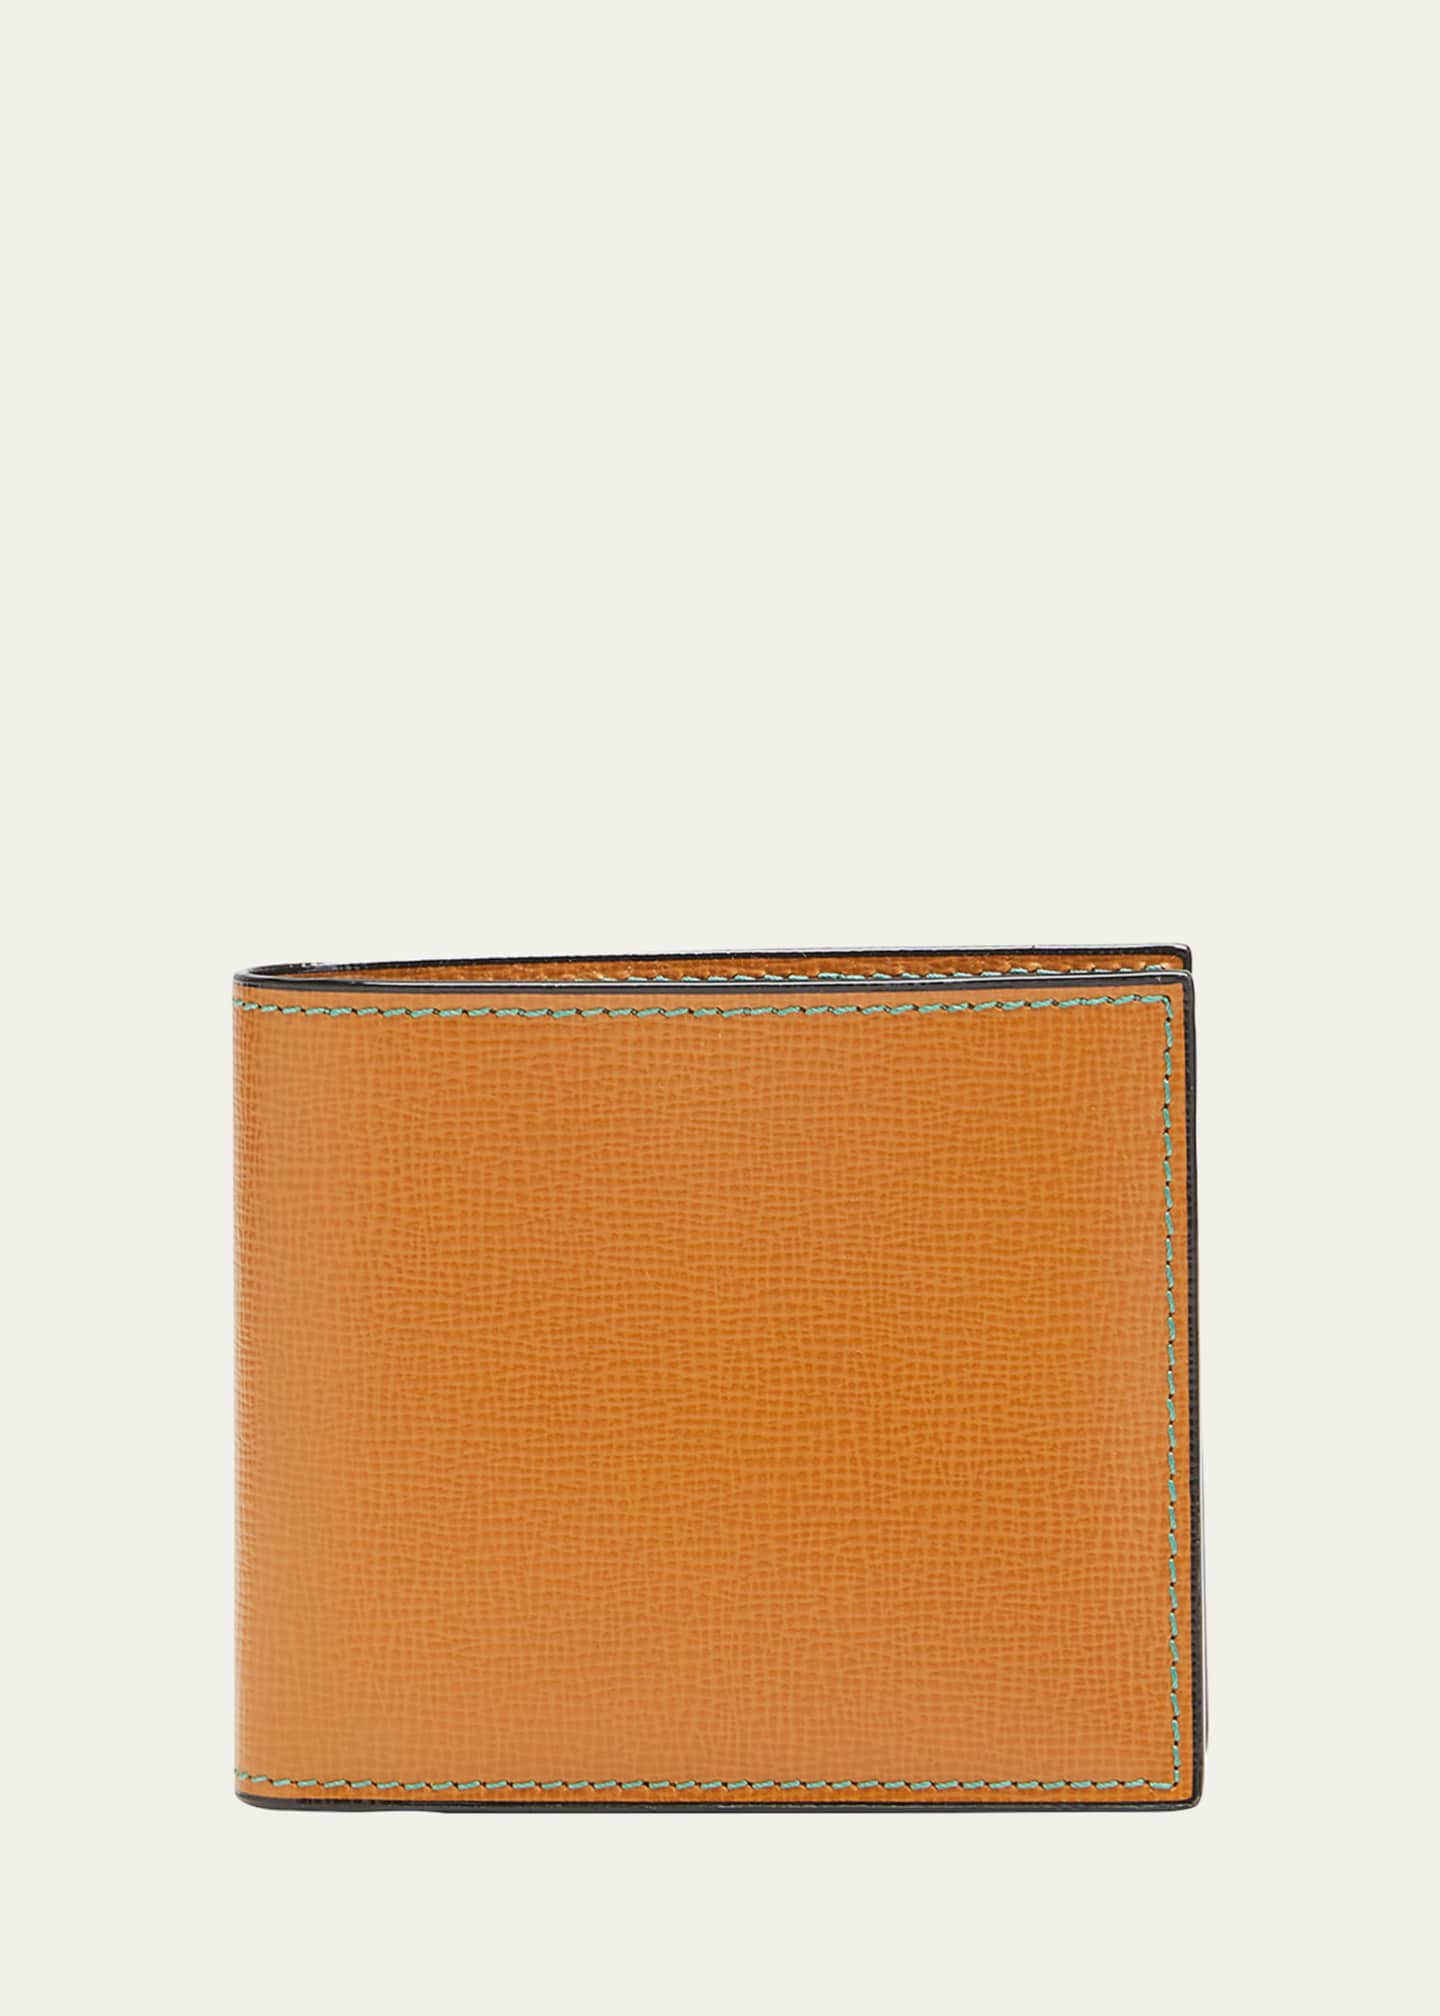 Luxury Designer Men's Wallet Leather Bifold Long Wallet With